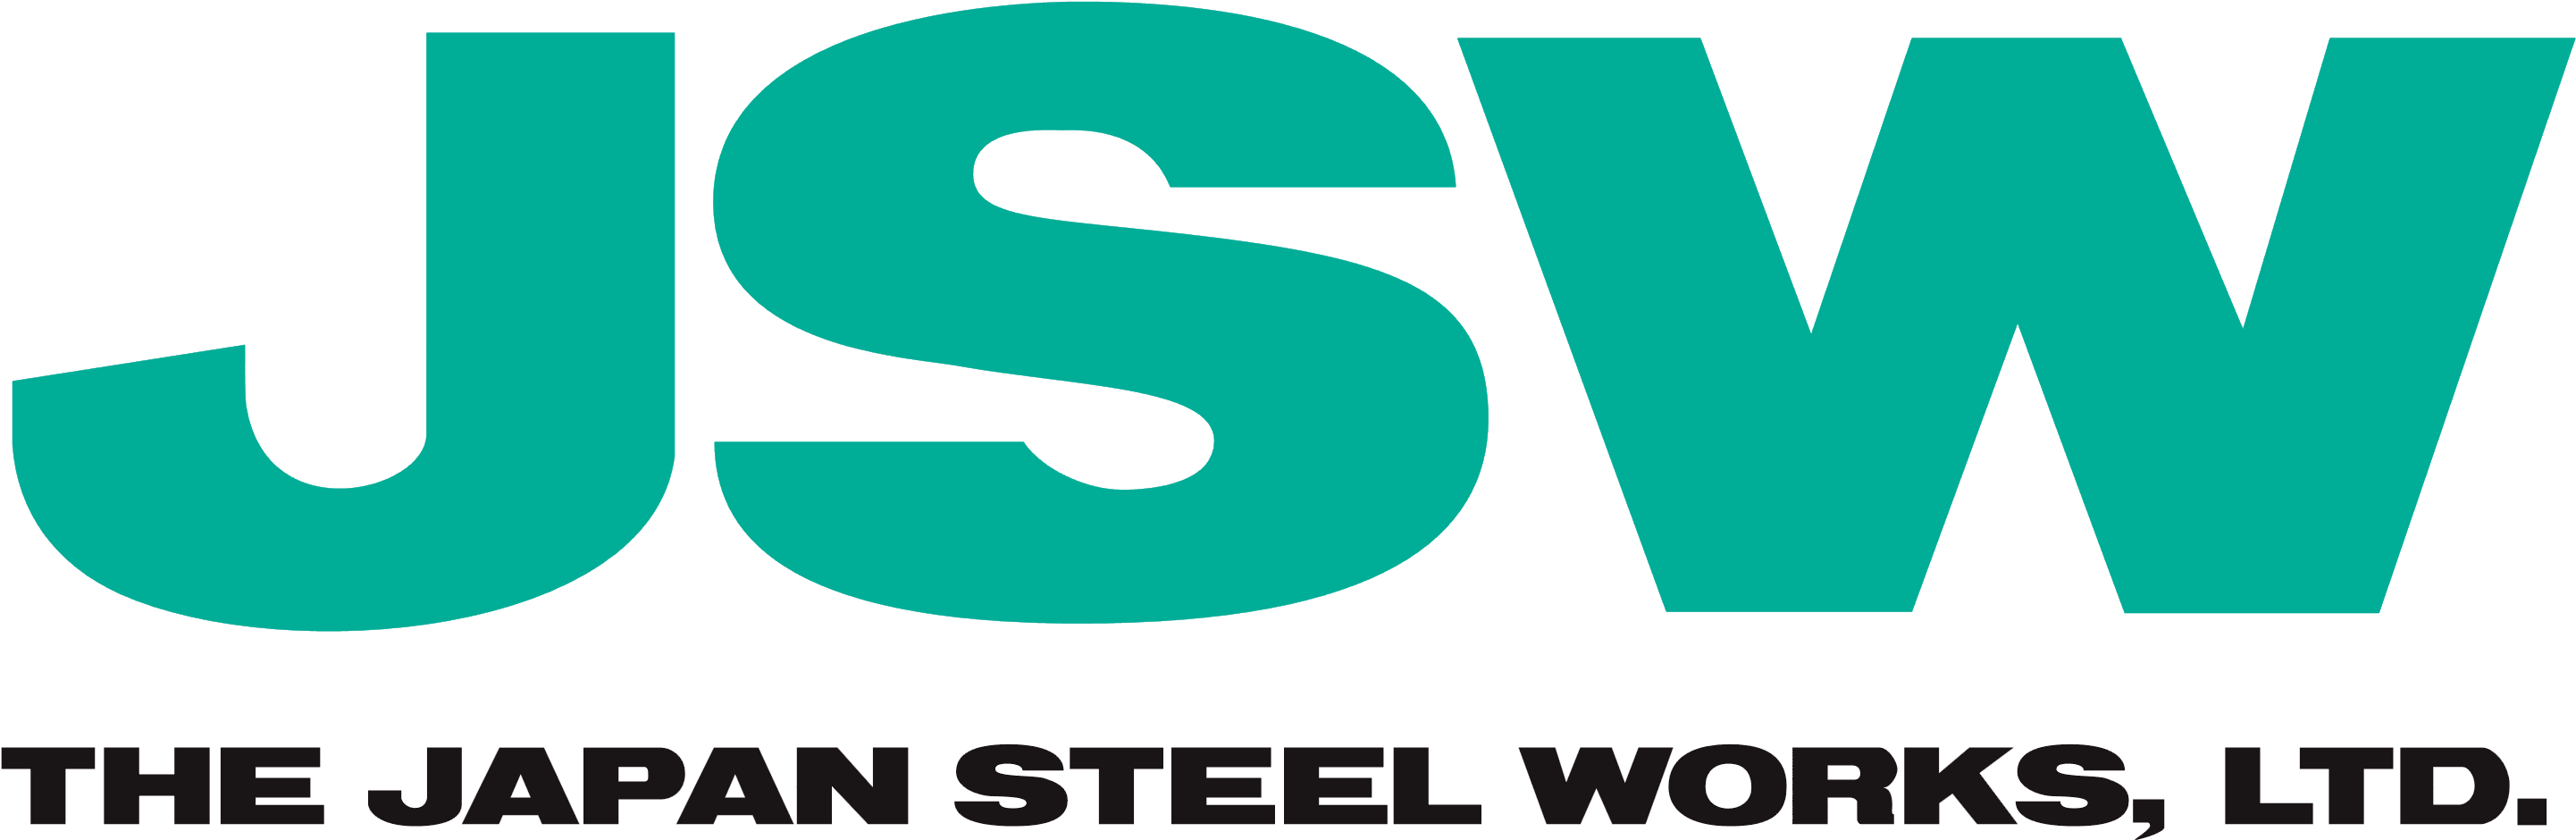 Steel Works Logo - Injection Molding Machine (3000x1030)